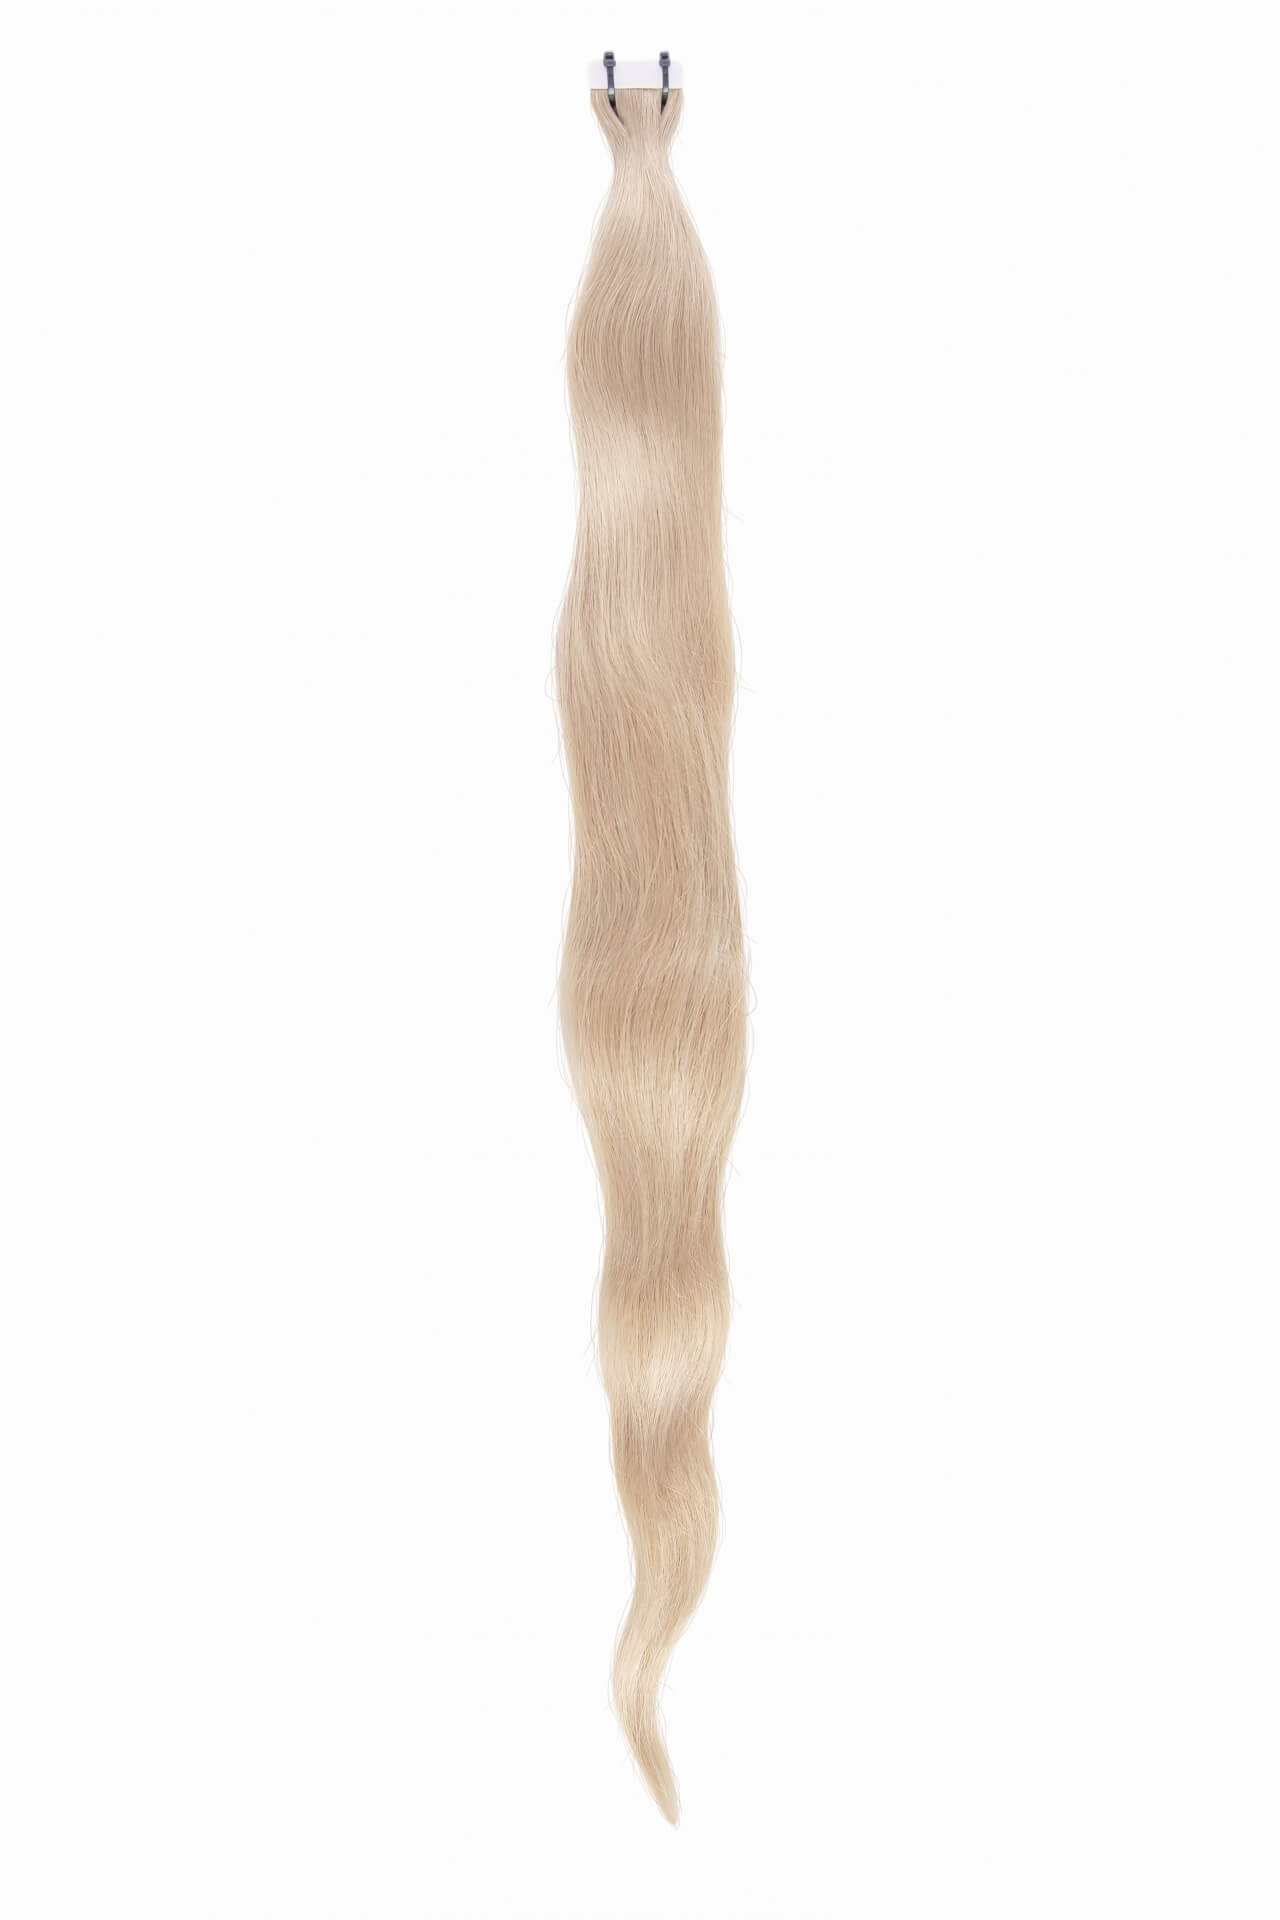 Vlasové pásky Original, odstín 8